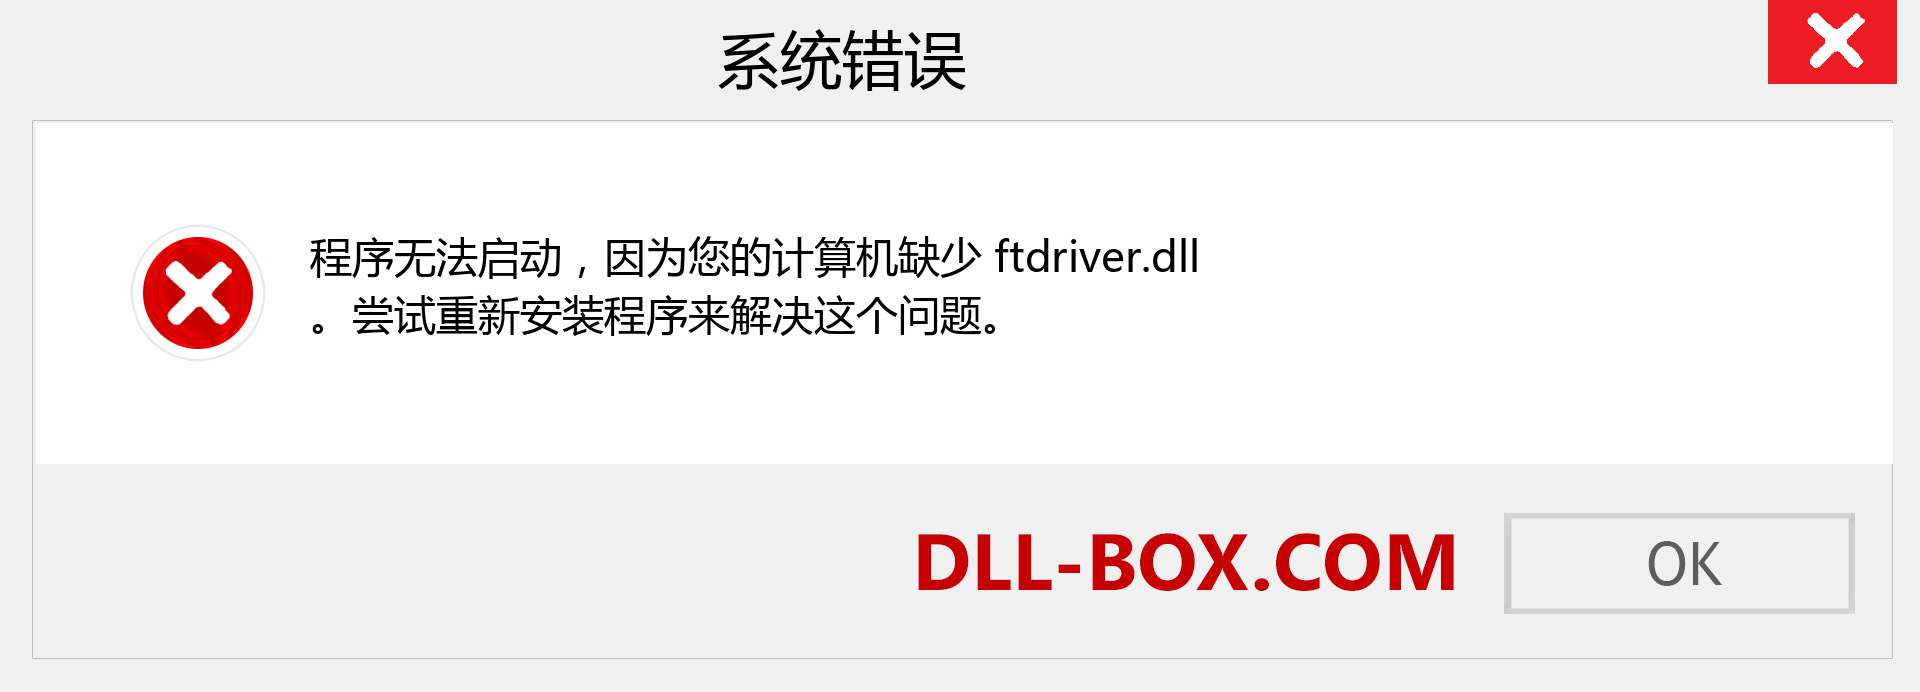 ftdriver.dll 文件丢失？。 适用于 Windows 7、8、10 的下载 - 修复 Windows、照片、图像上的 ftdriver dll 丢失错误